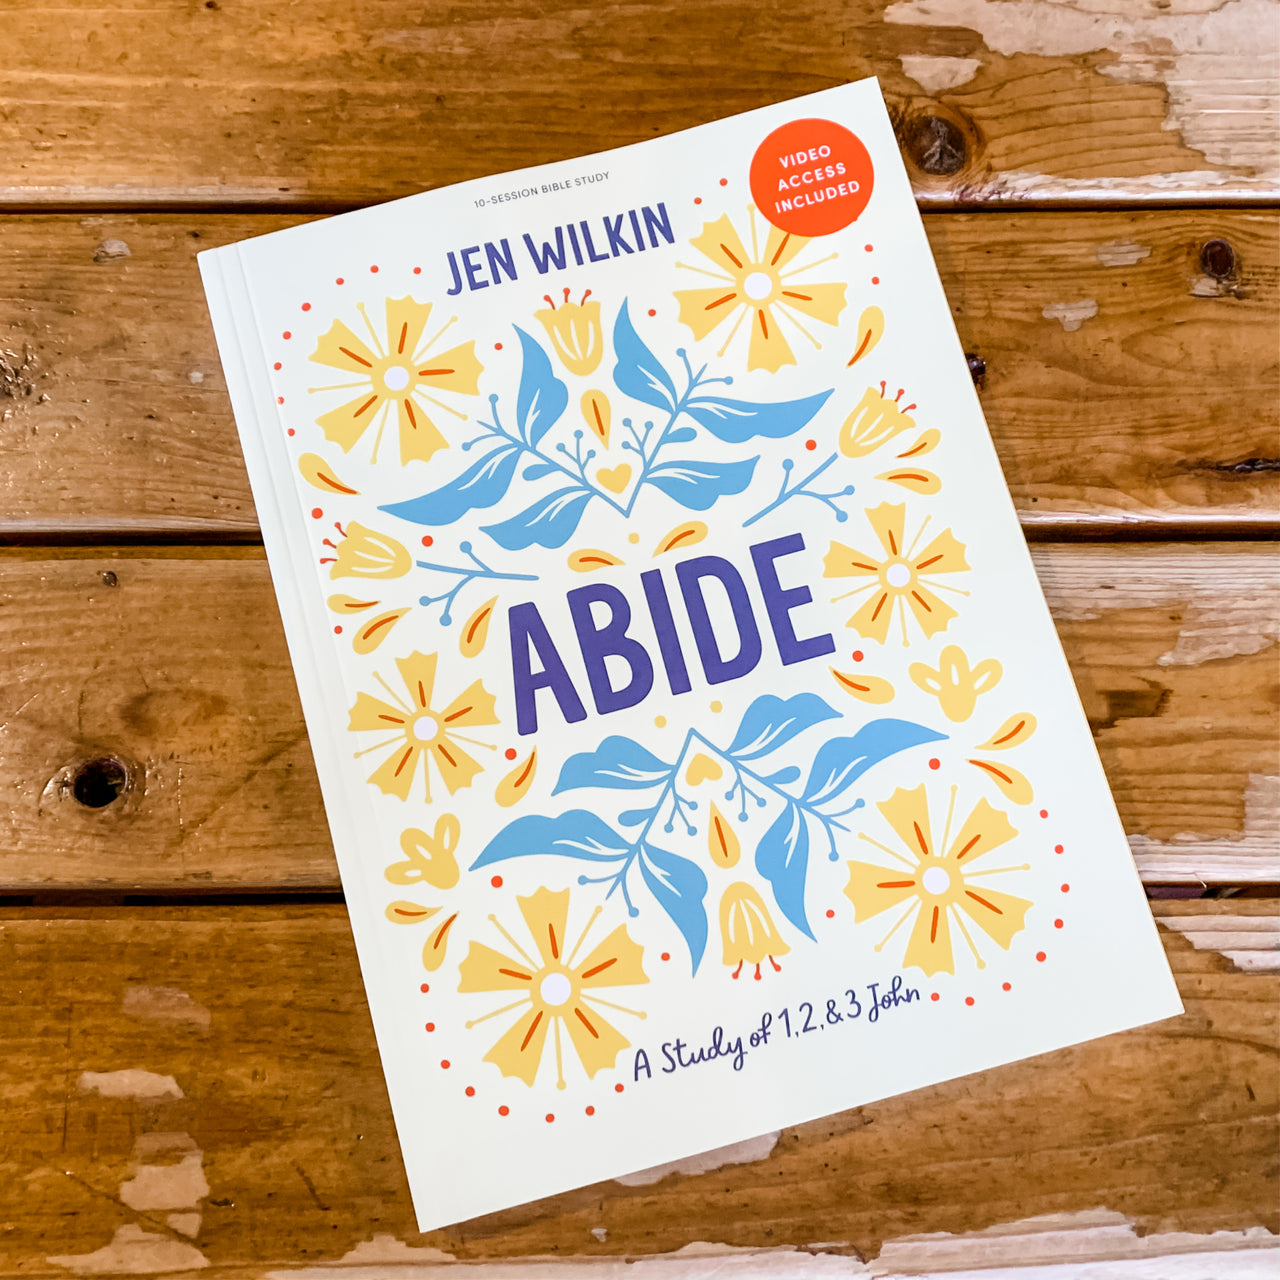 Abide Bible Study Book: A Study of 1,2 & 3 John